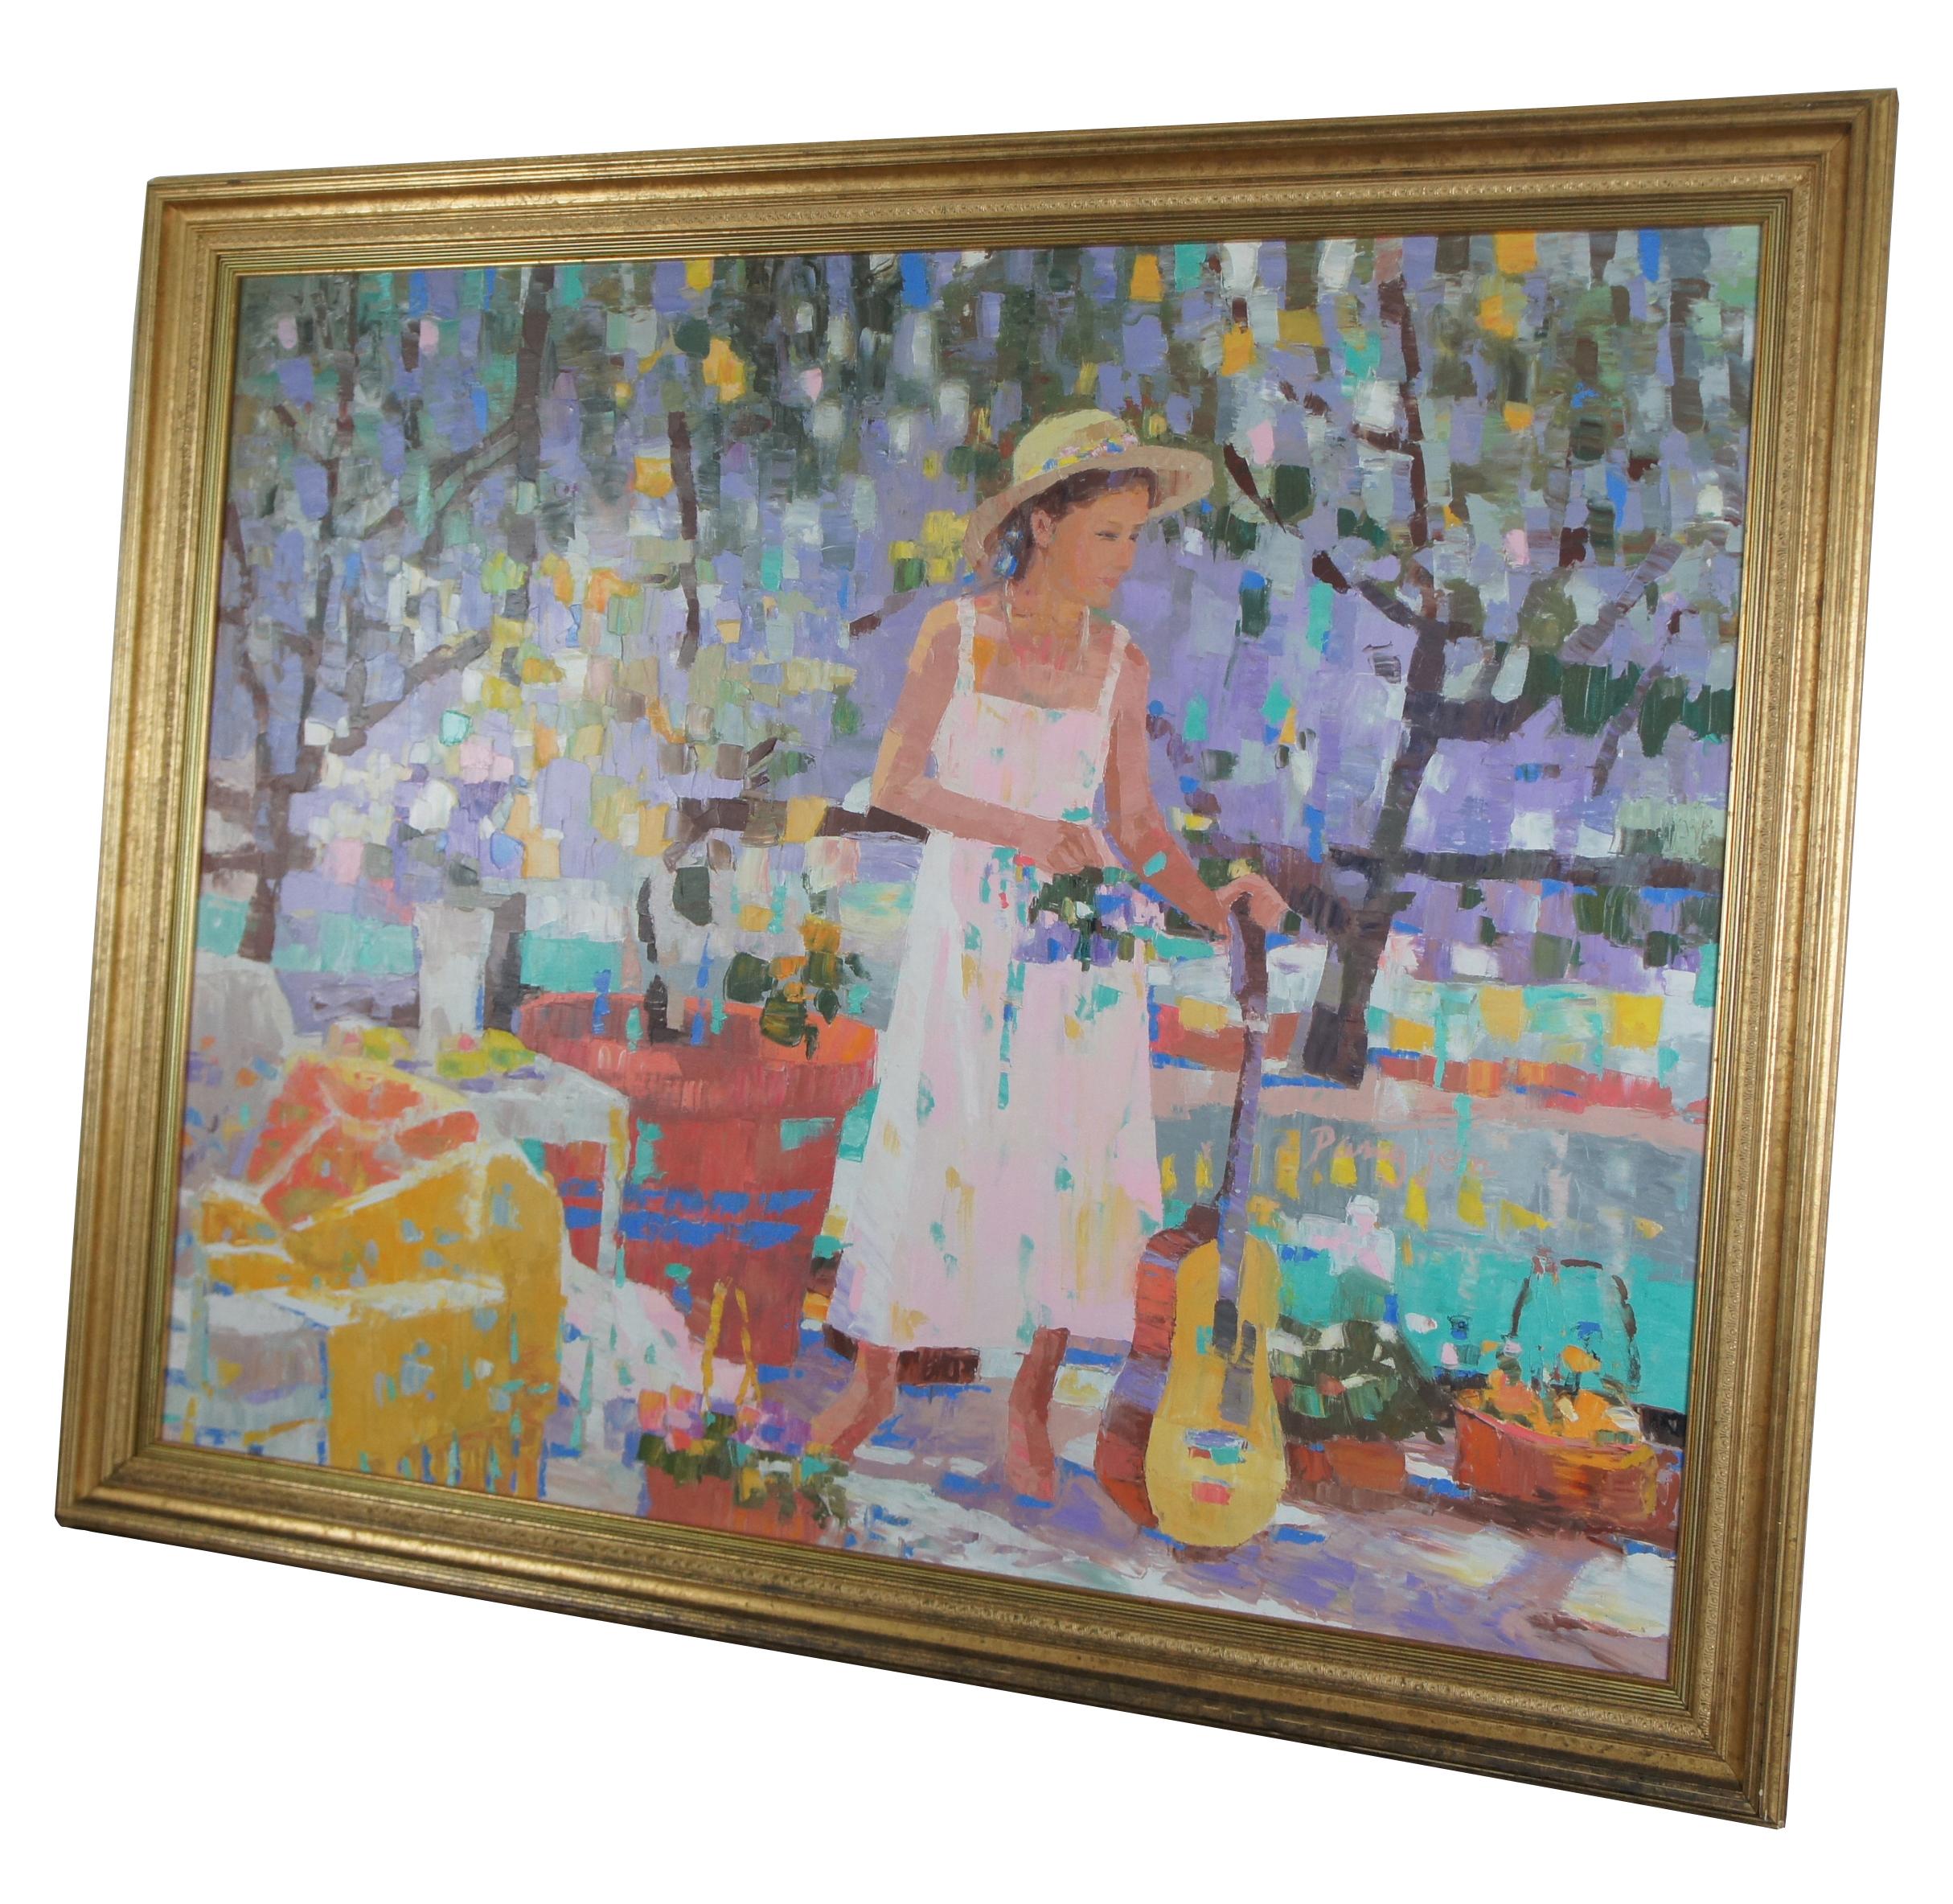 Pang Jen (Pong Zhen, Peng Jen) late 20th century original oil on canvas. Features a girl with a guitar on a patio overlooking a garden landscape. Size: 54